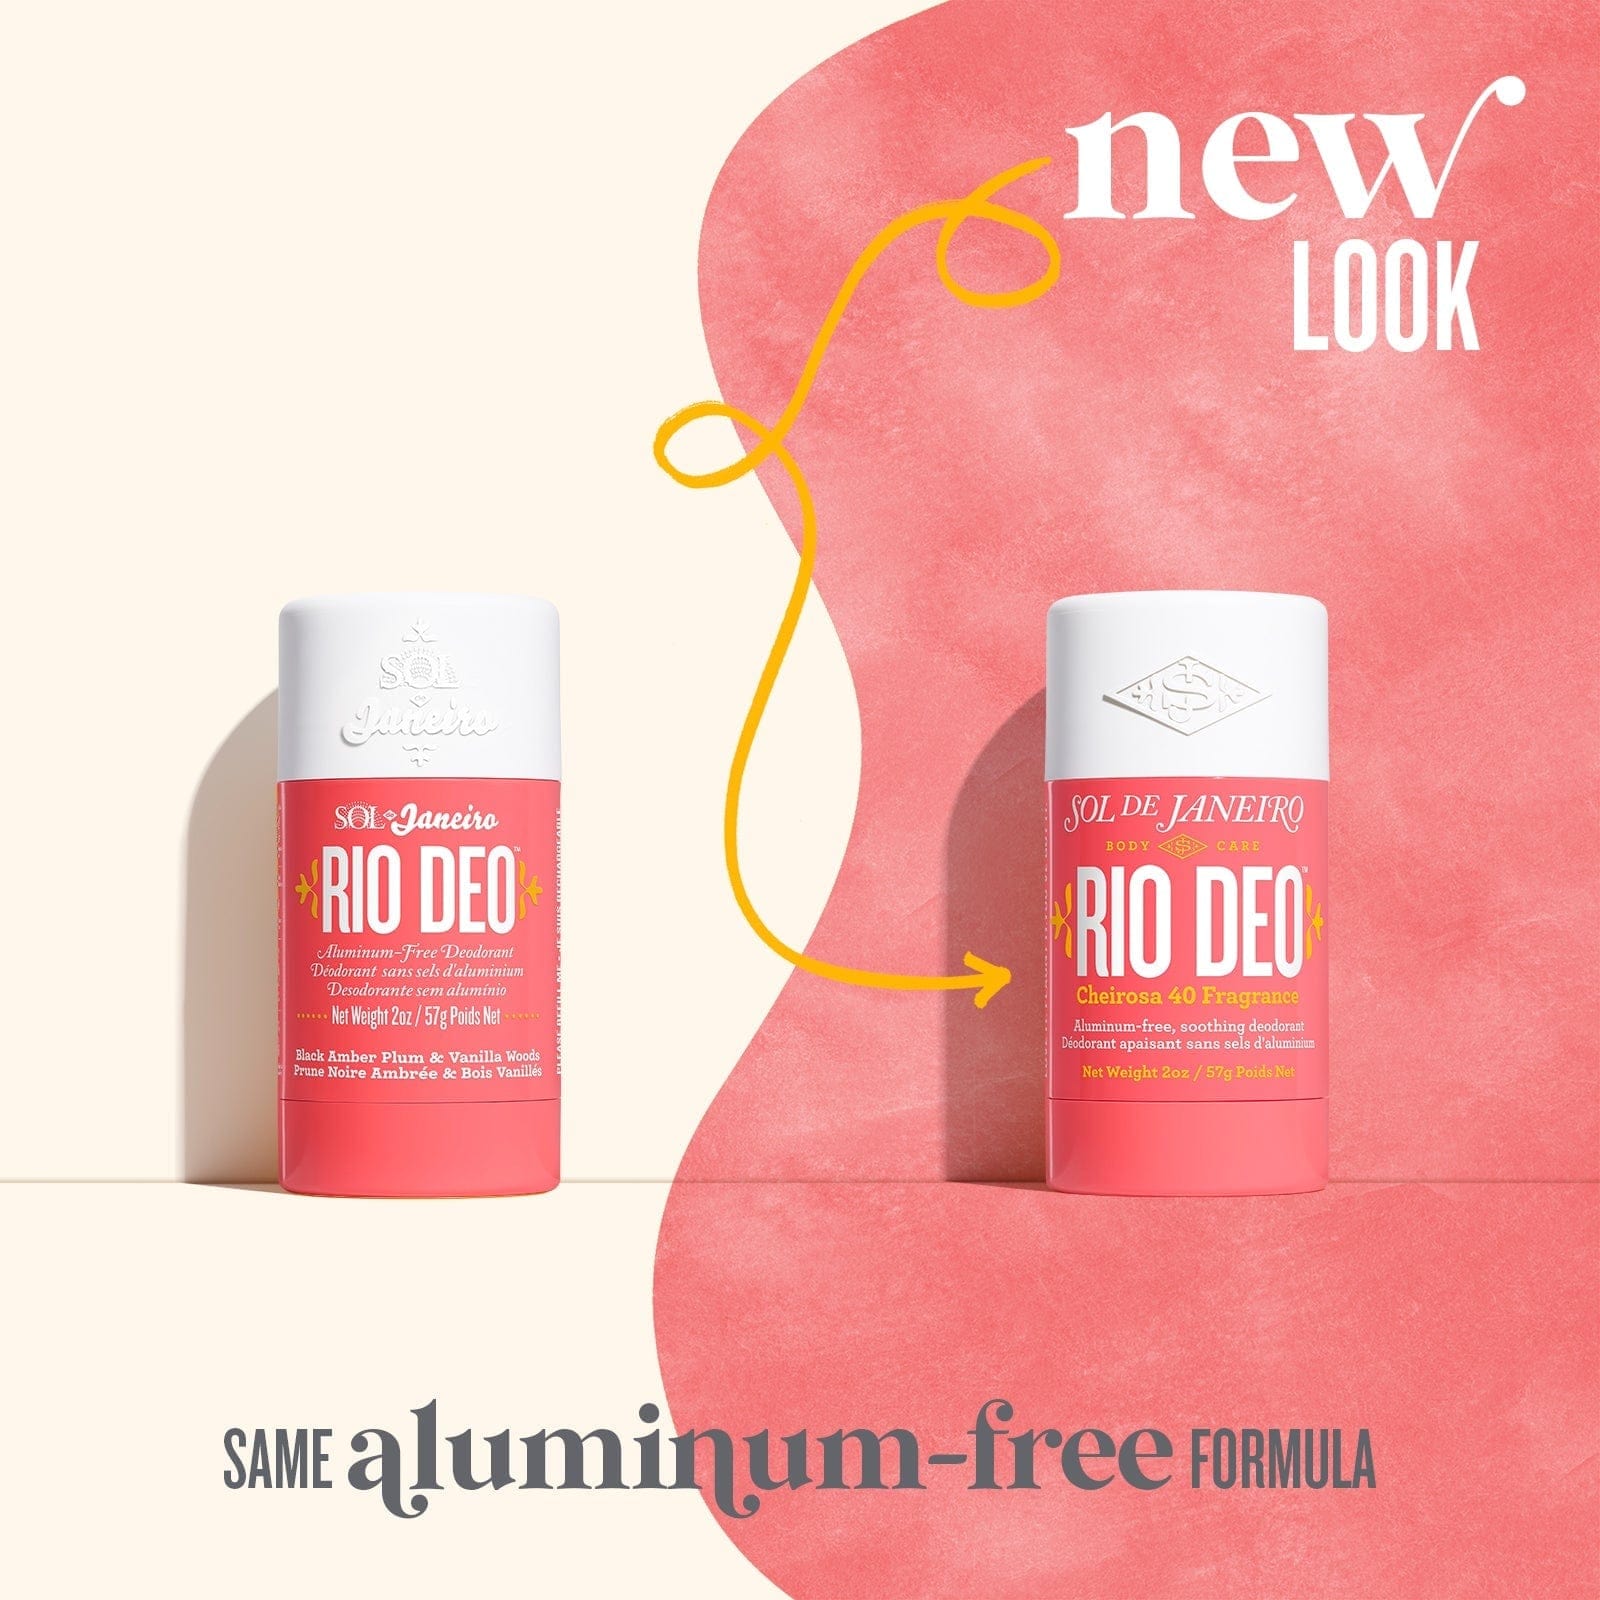 New look - same aluminum free formula